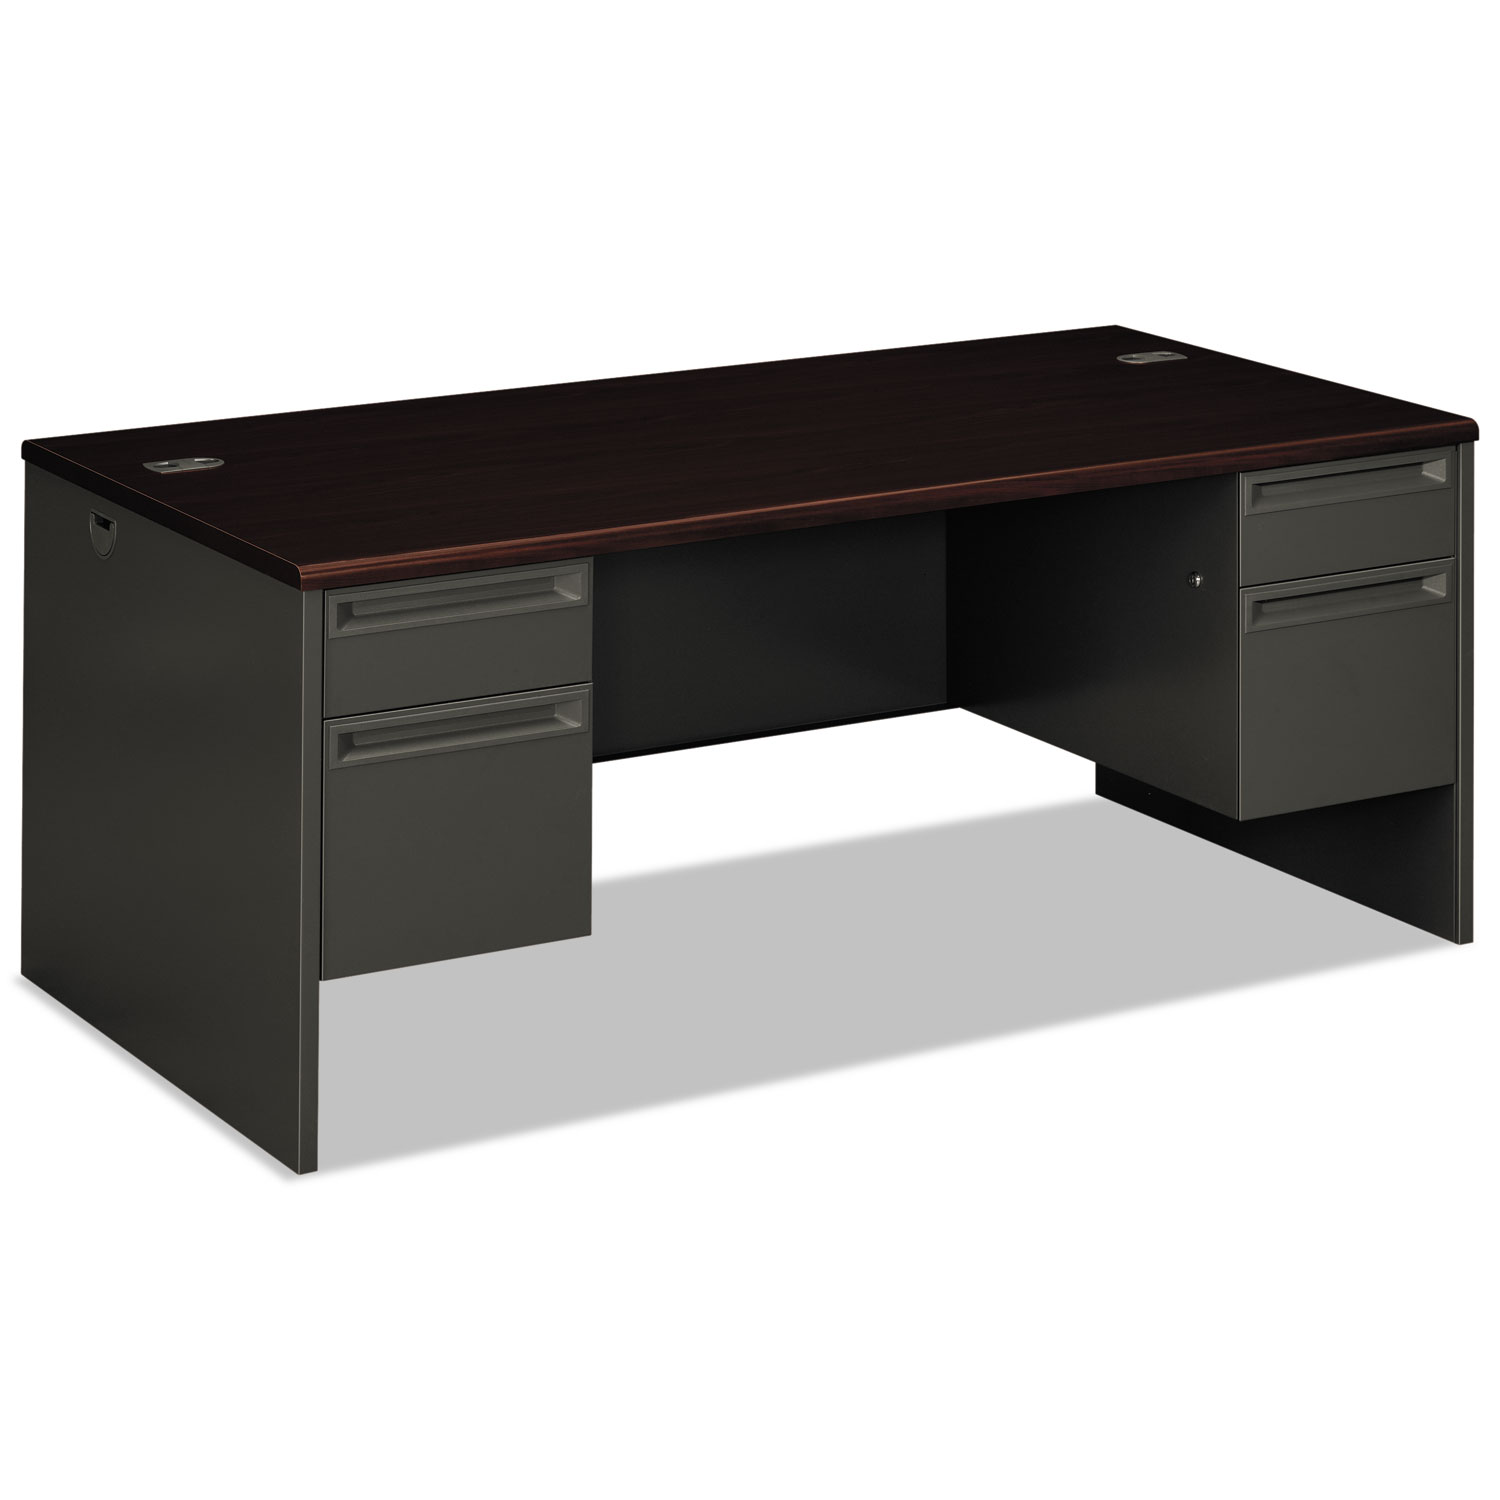 HON HON38180NS 38000 Series Double Pedestal Desk, 72w x 36d x 29-1/2h, Mahogany/Charcoal